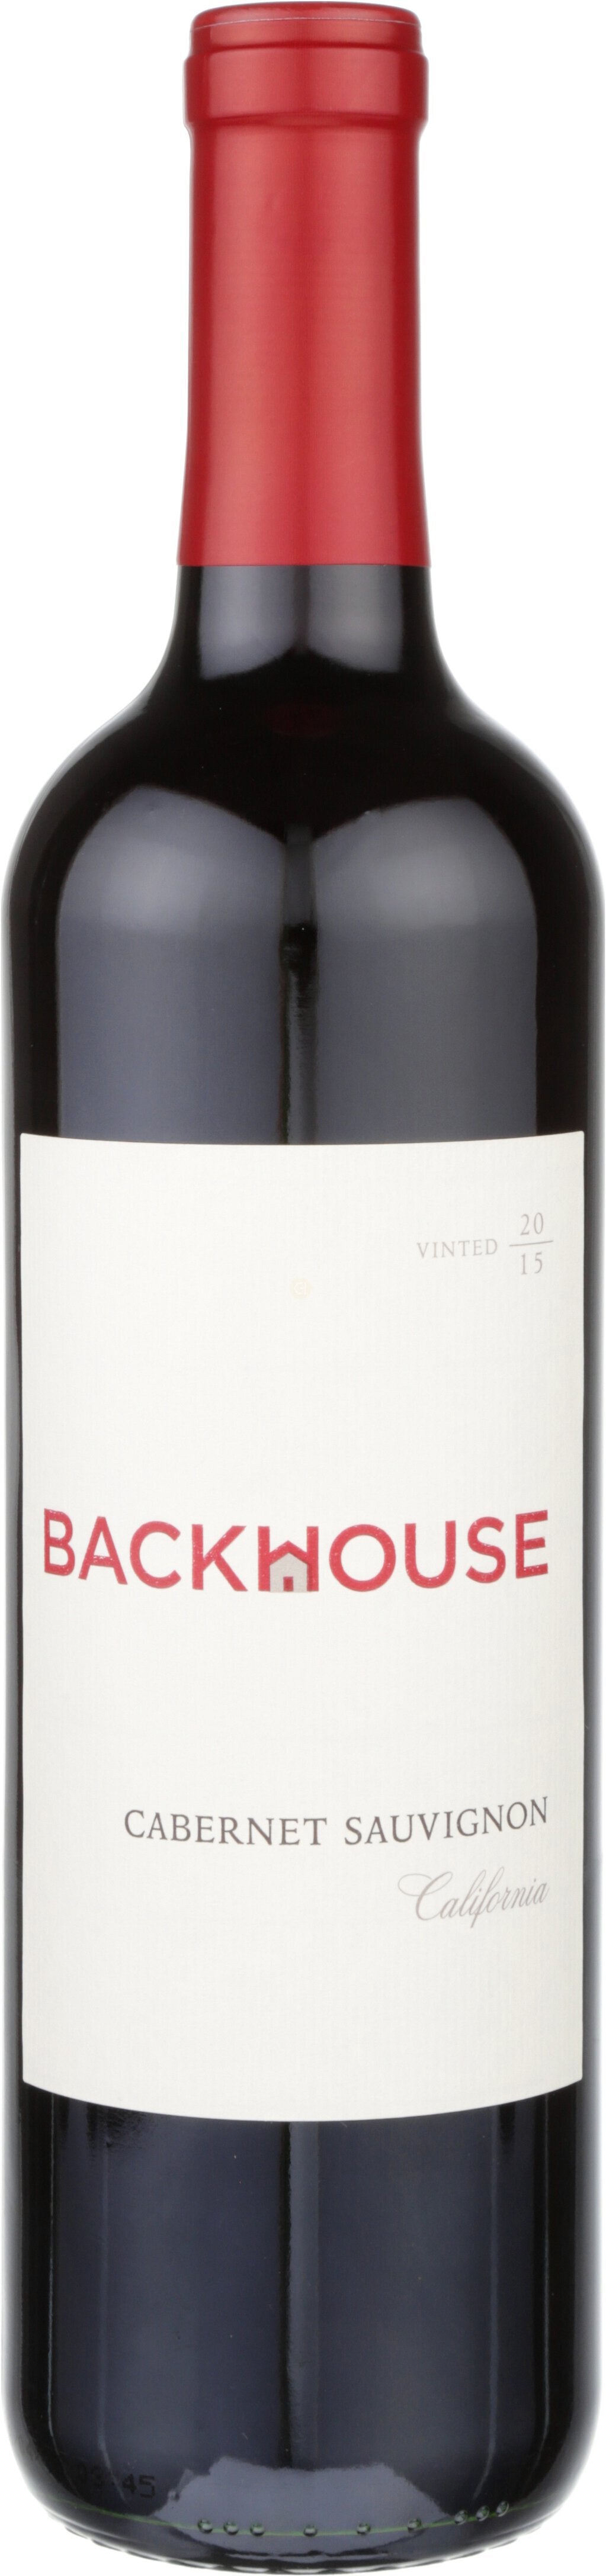 Backhouse Wines Cabernet Sauvignon California